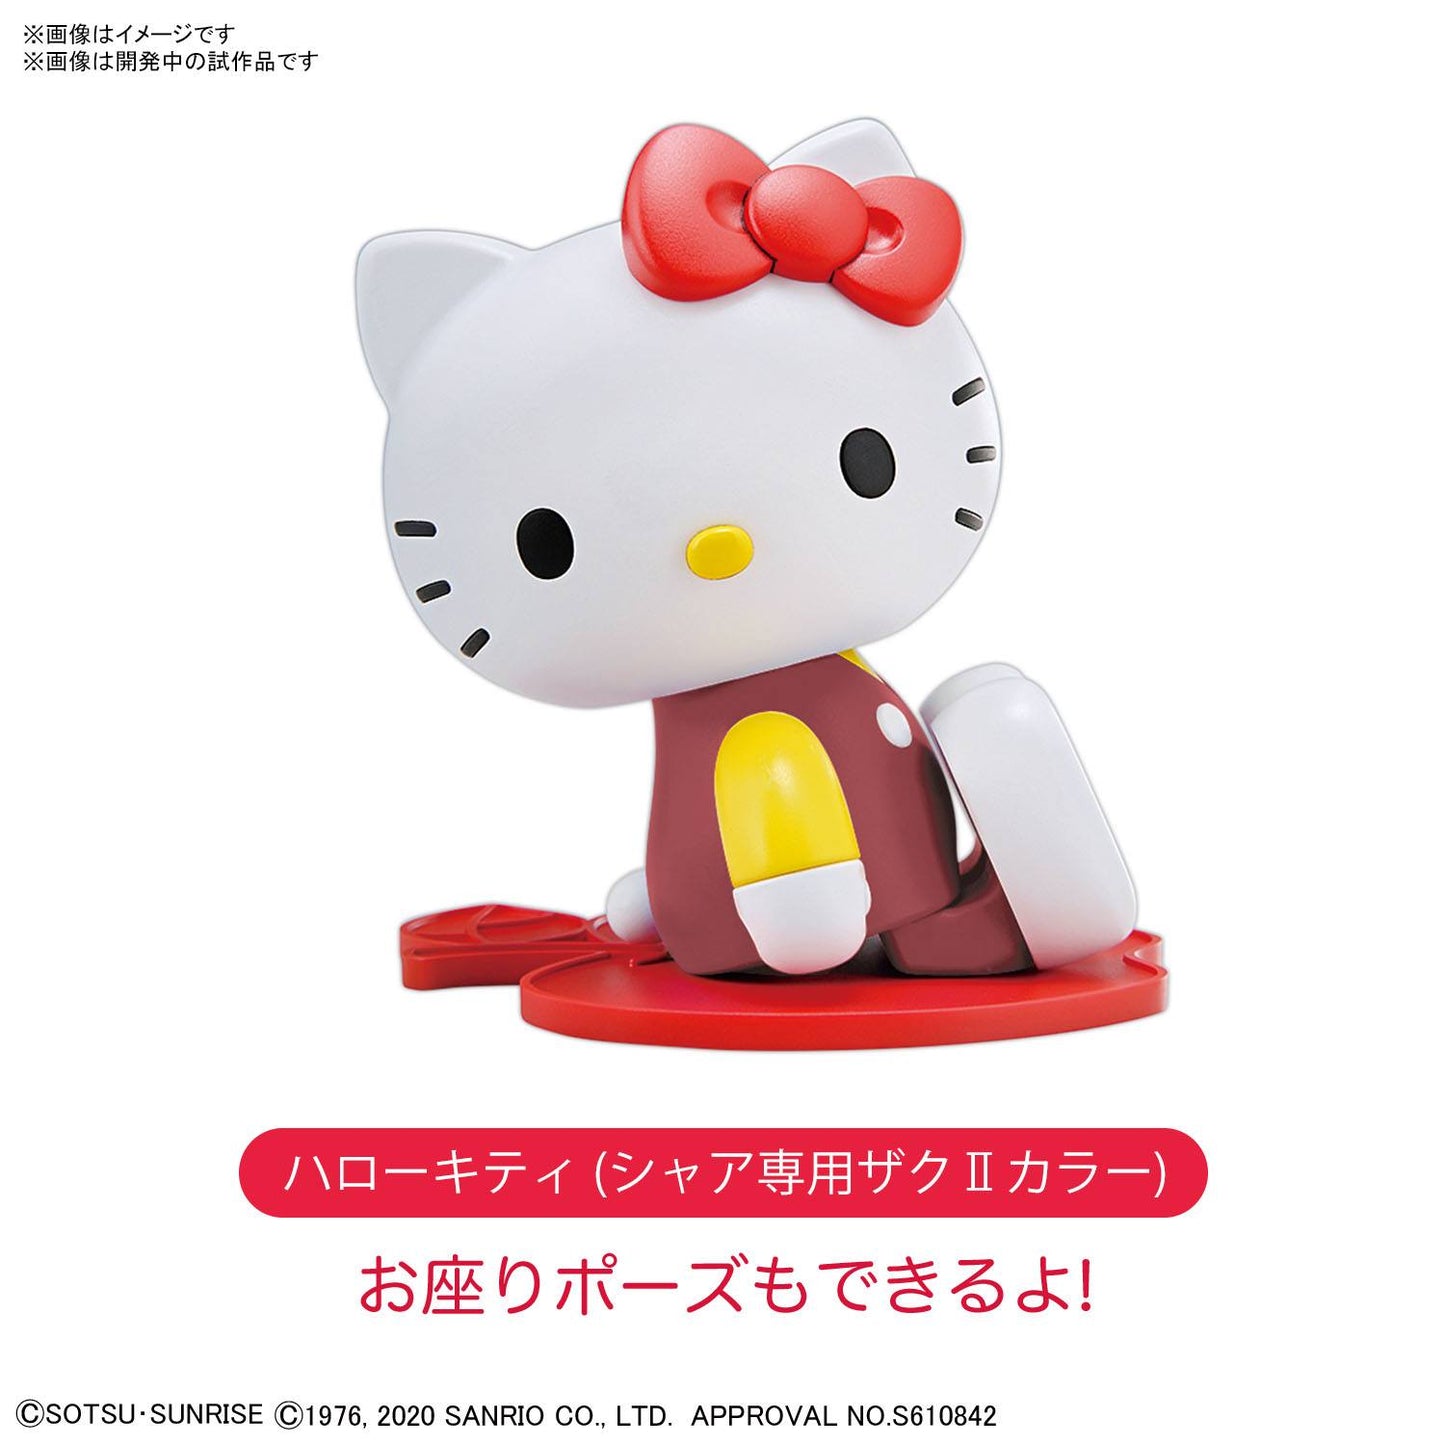 SDCS Hello Kitty Char's Zaku II